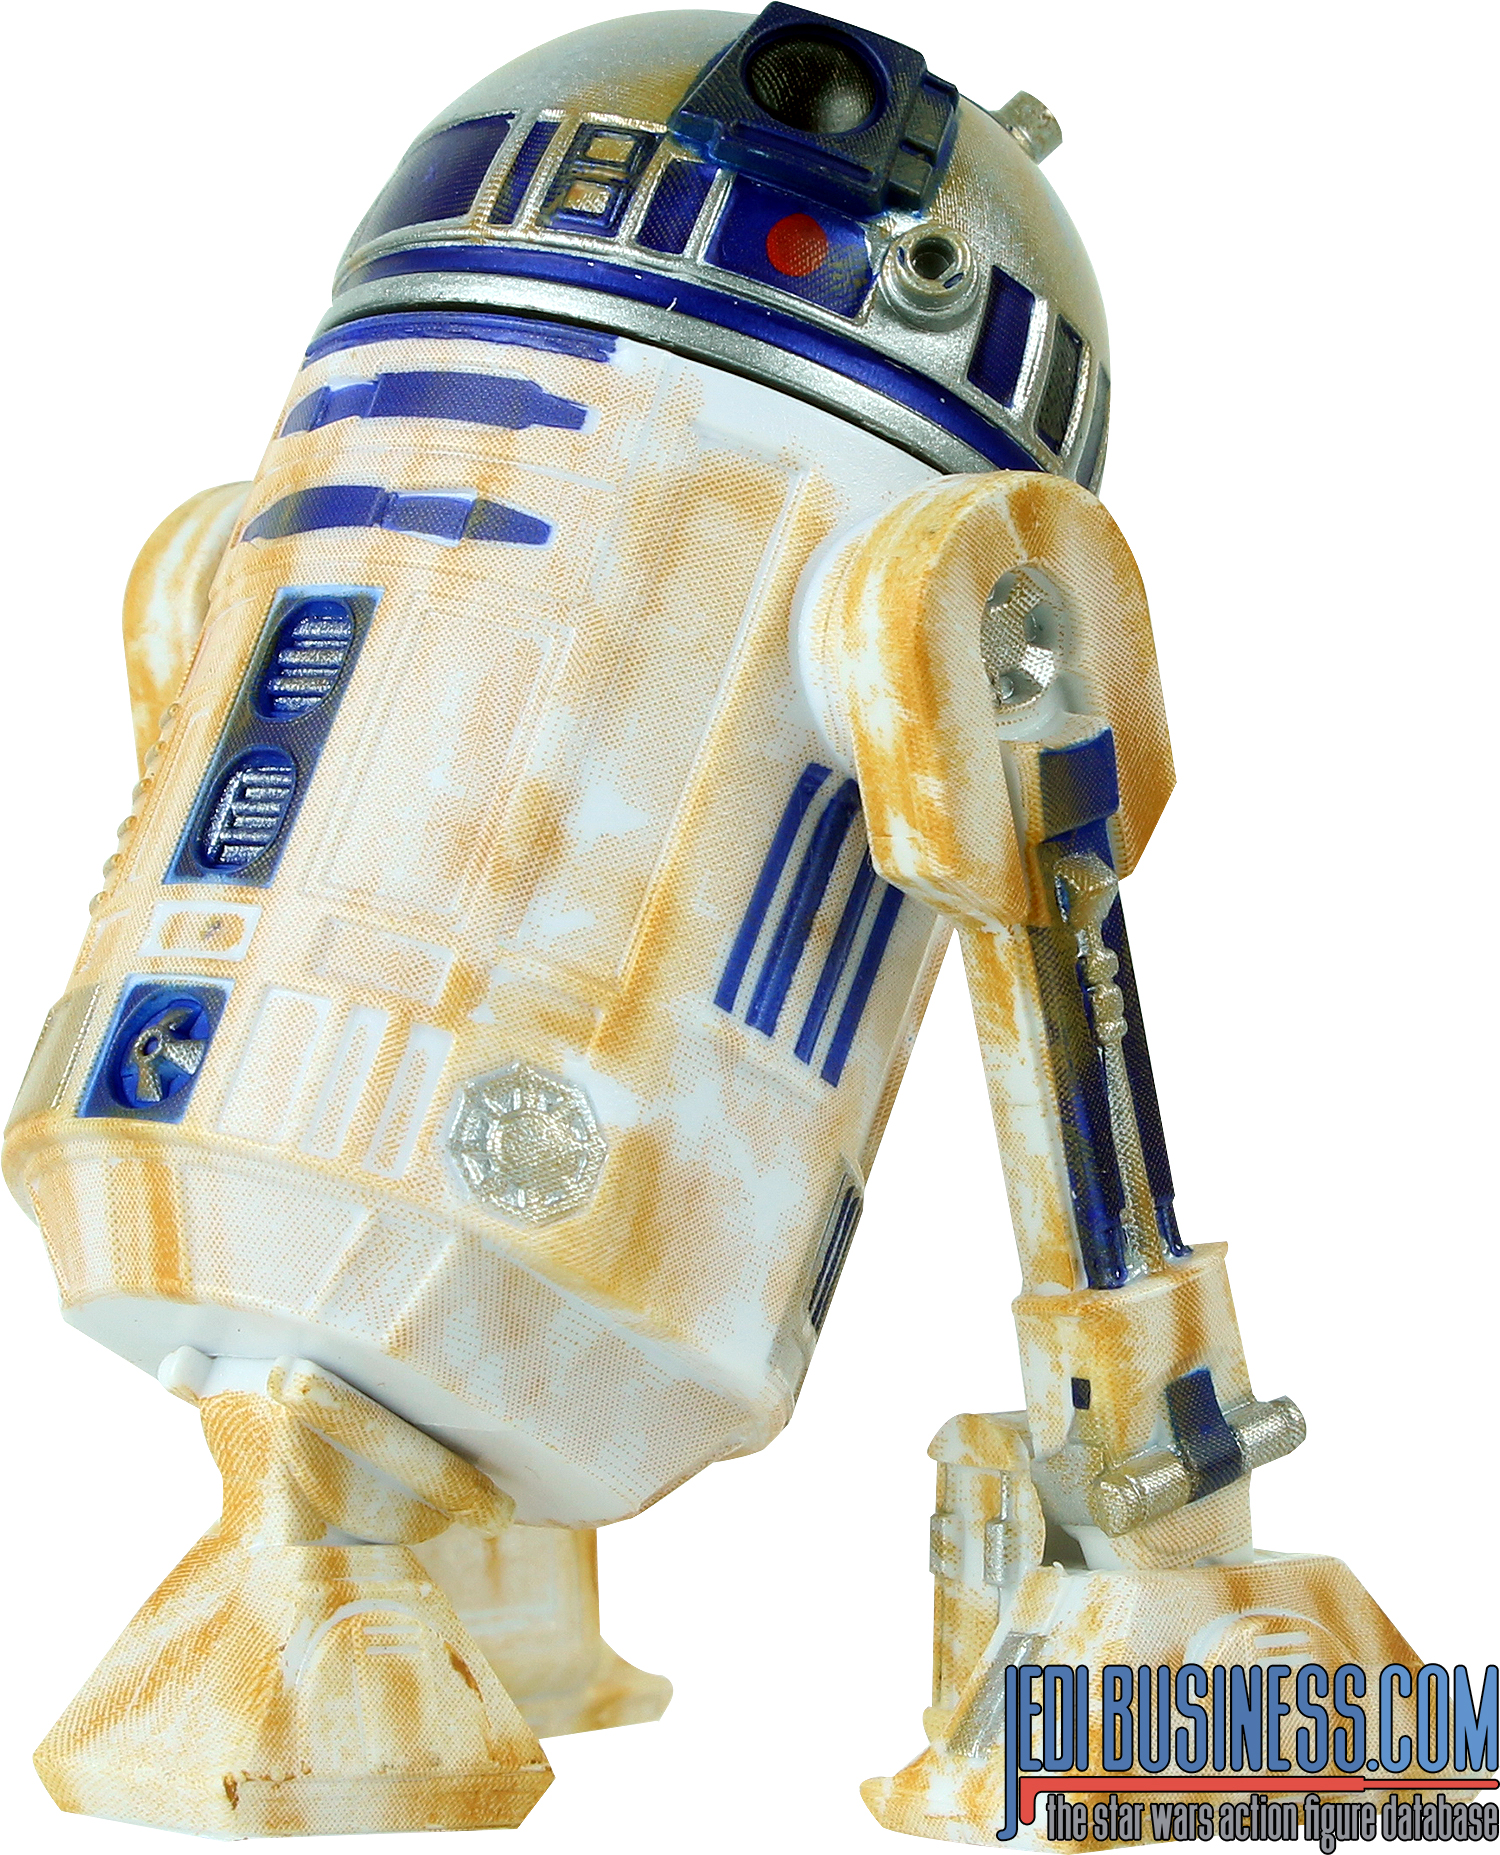 R2-D2 40th Anniversary 2-Pack